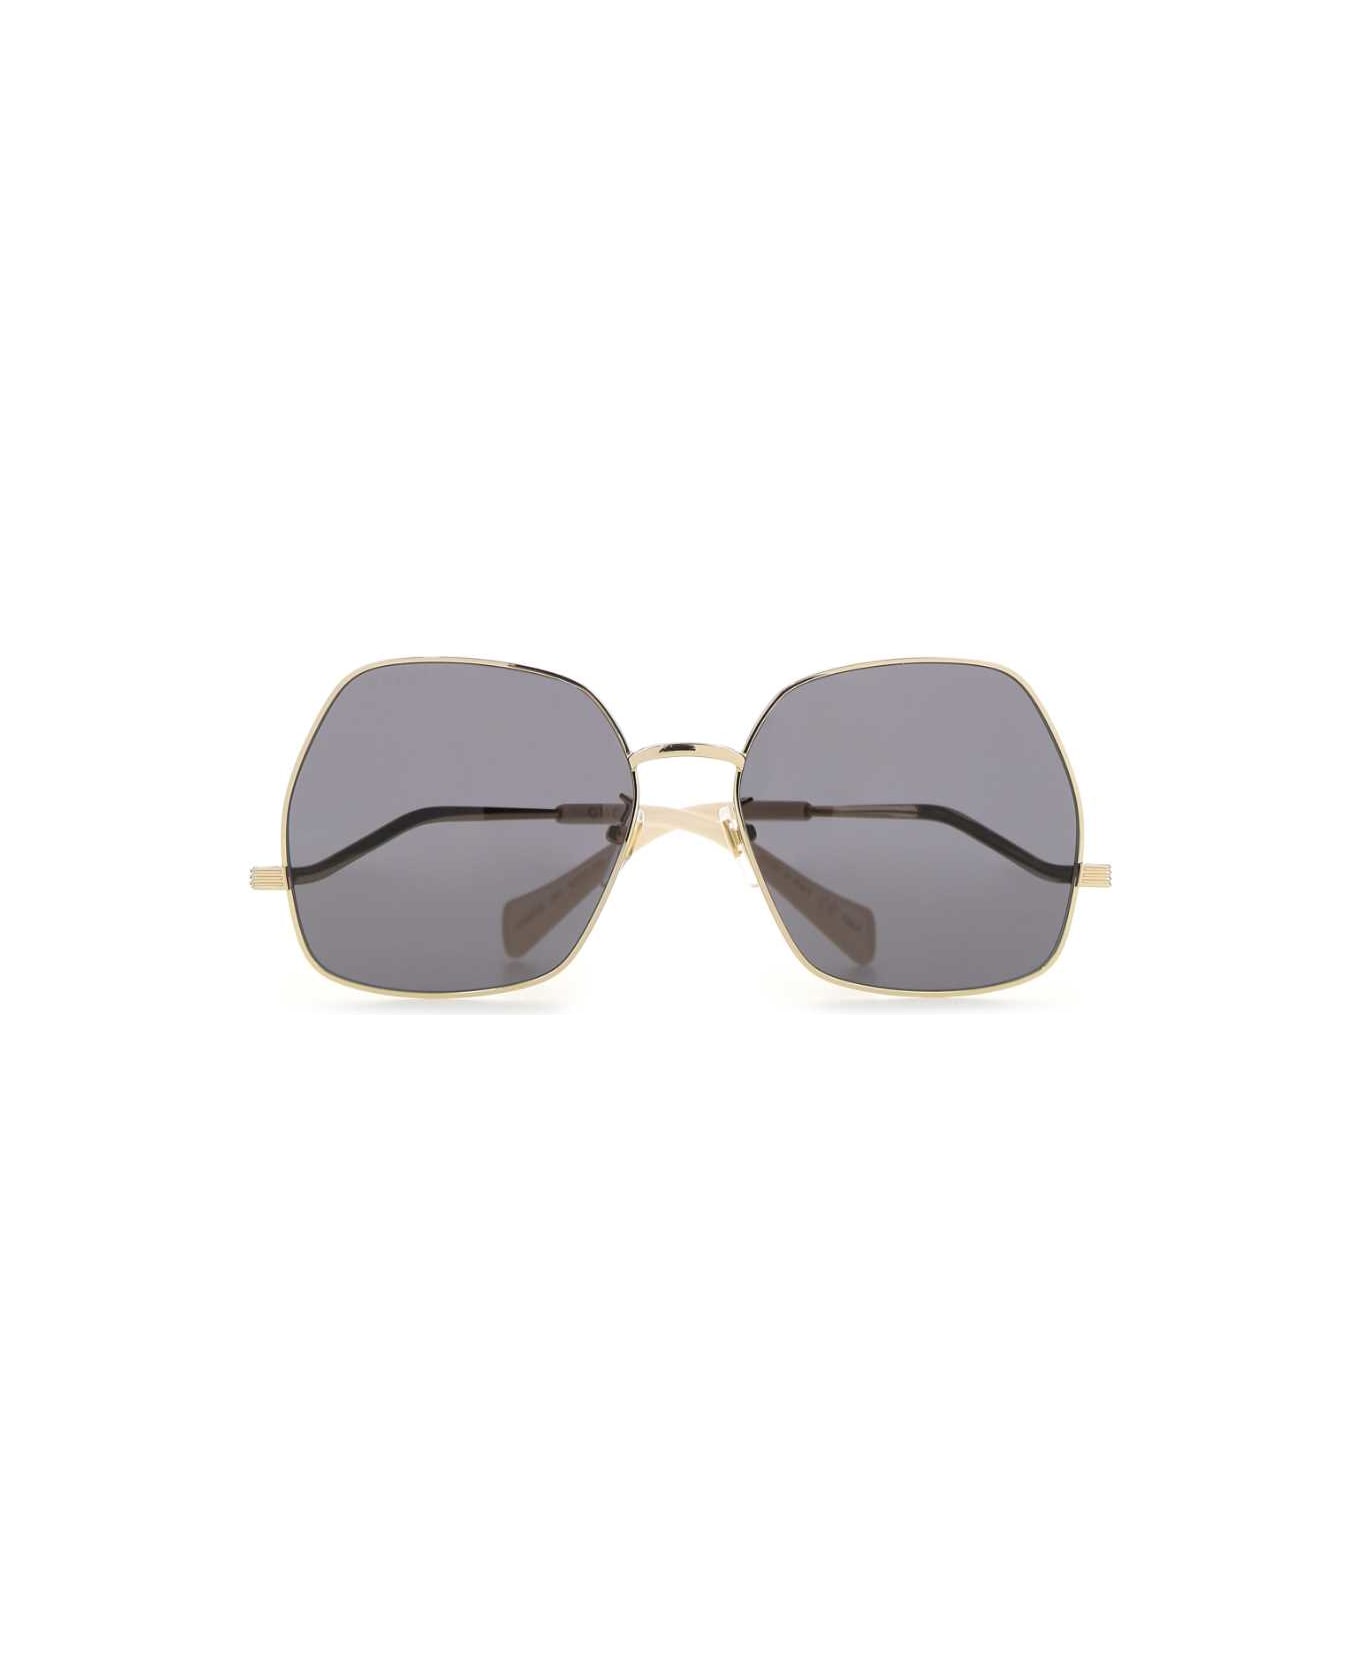 Gucci Gold Metal Sunglasses - 8012